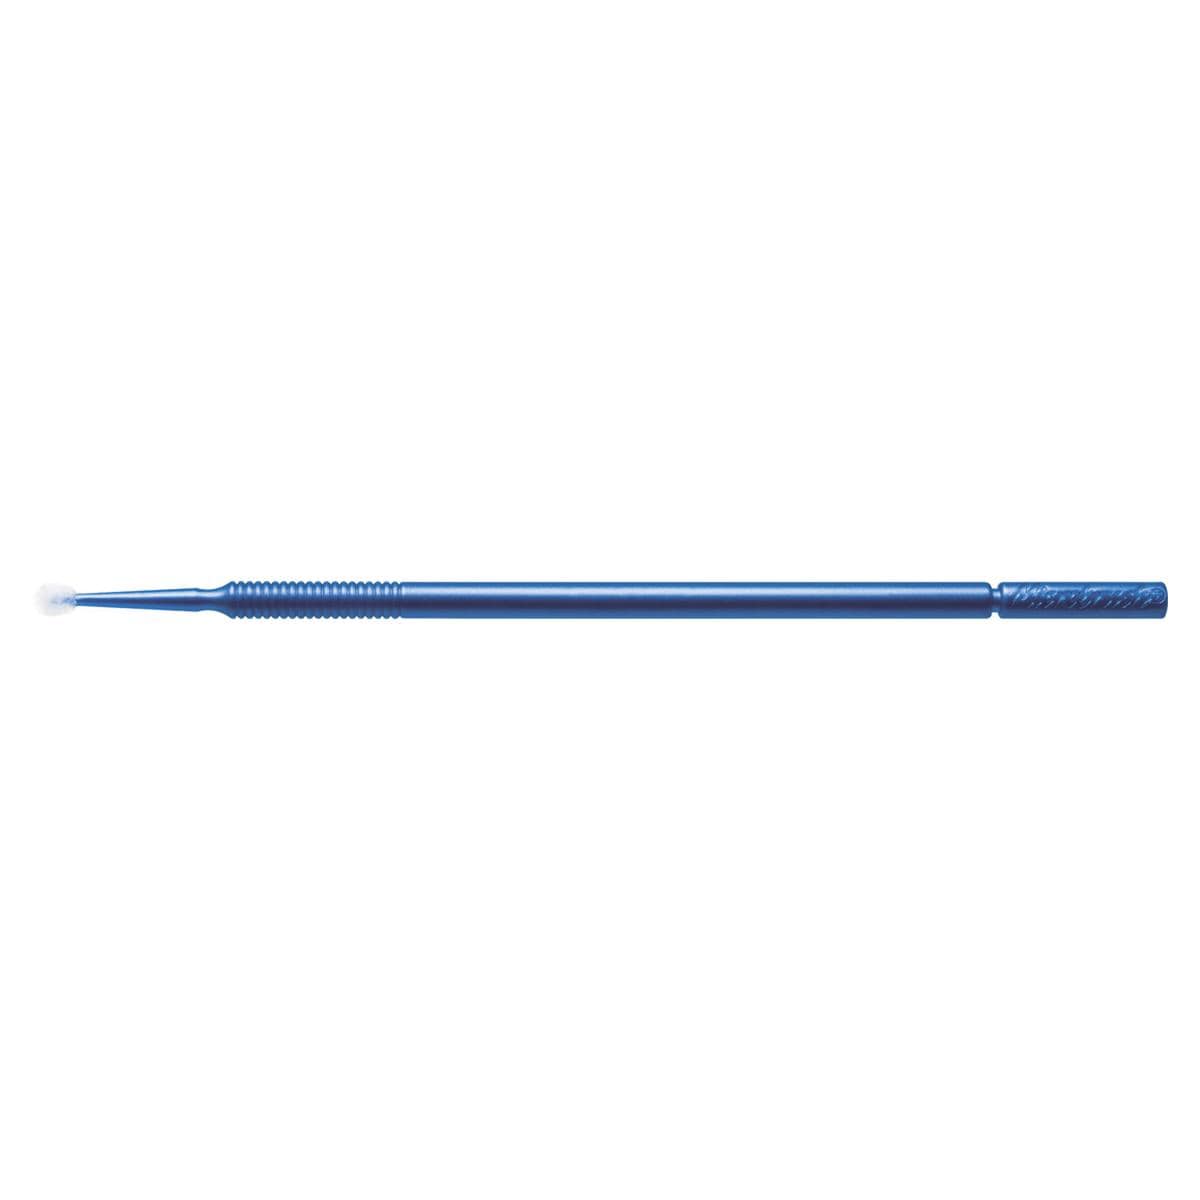 Microbrush® Plus Applikatoren - Nachfüllpackung - Blau, regulär, Ø 2,0 mm, Packung 100 Stück